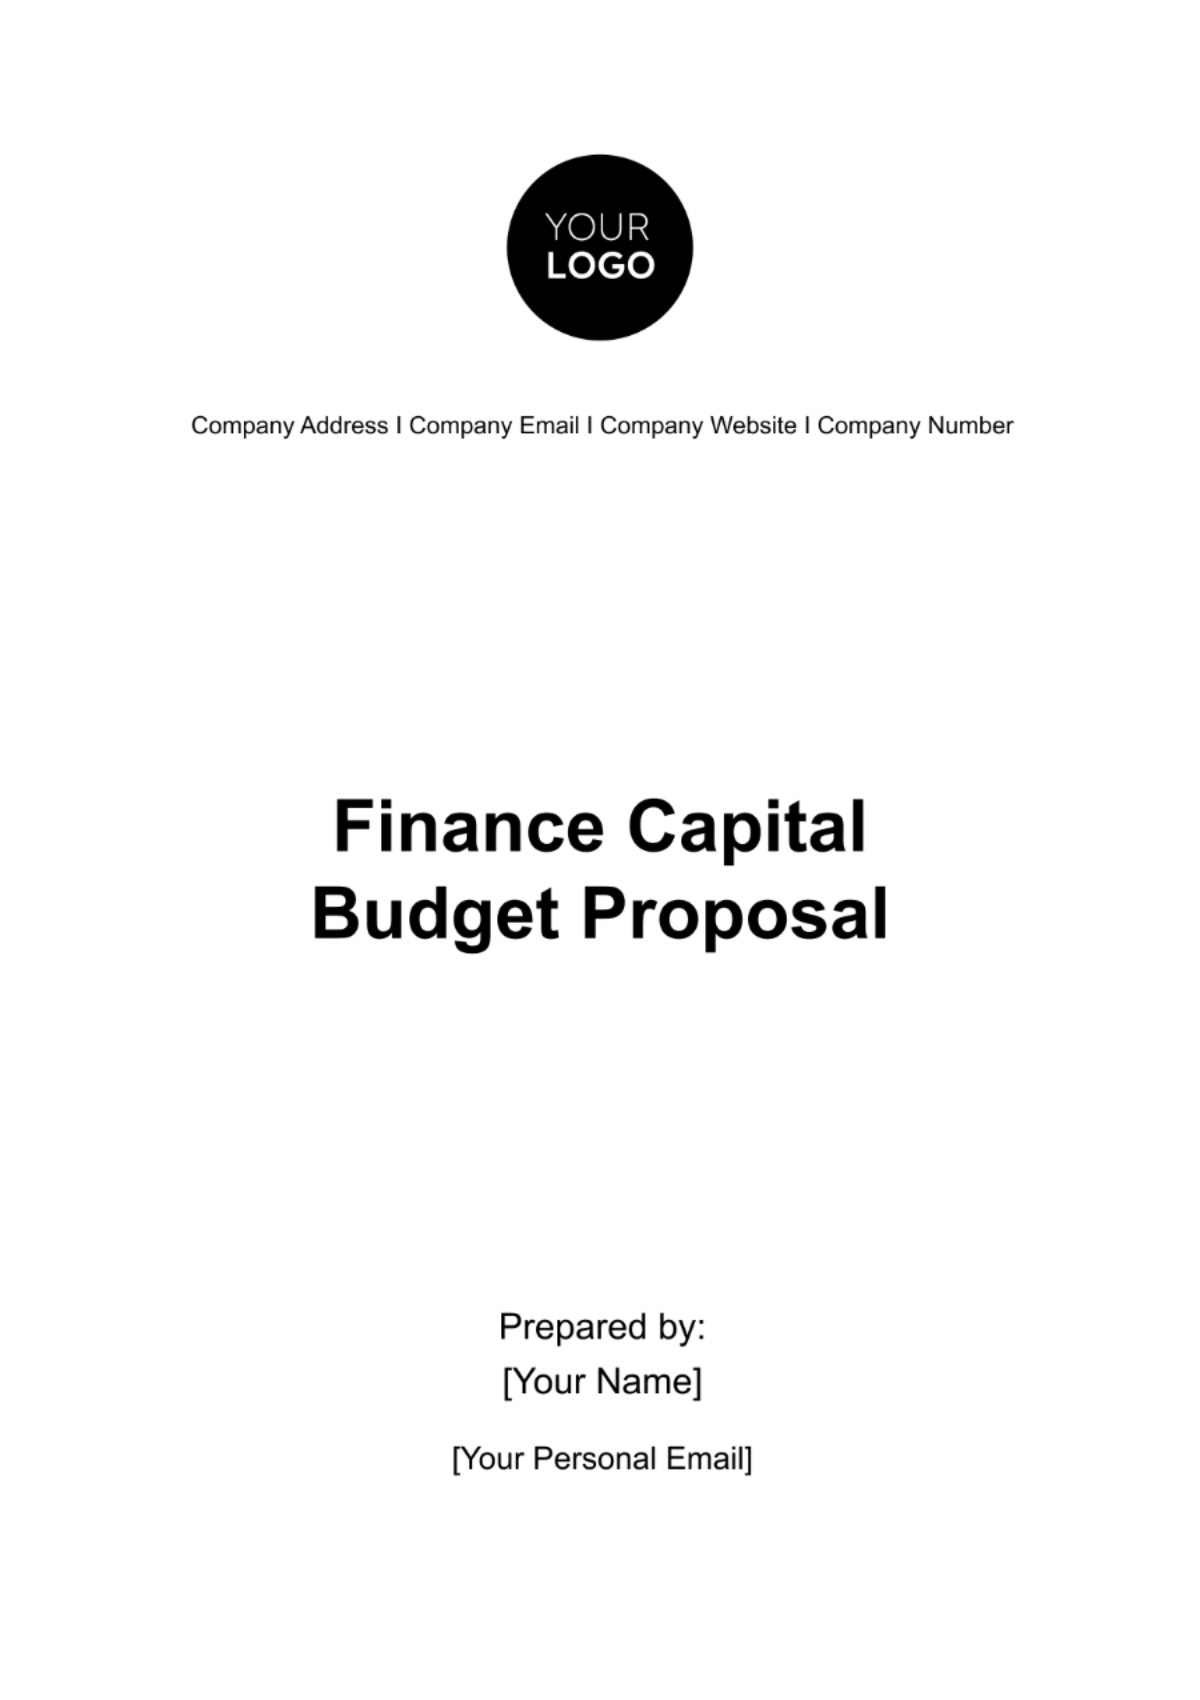 Finance Capital Budget Proposal Template